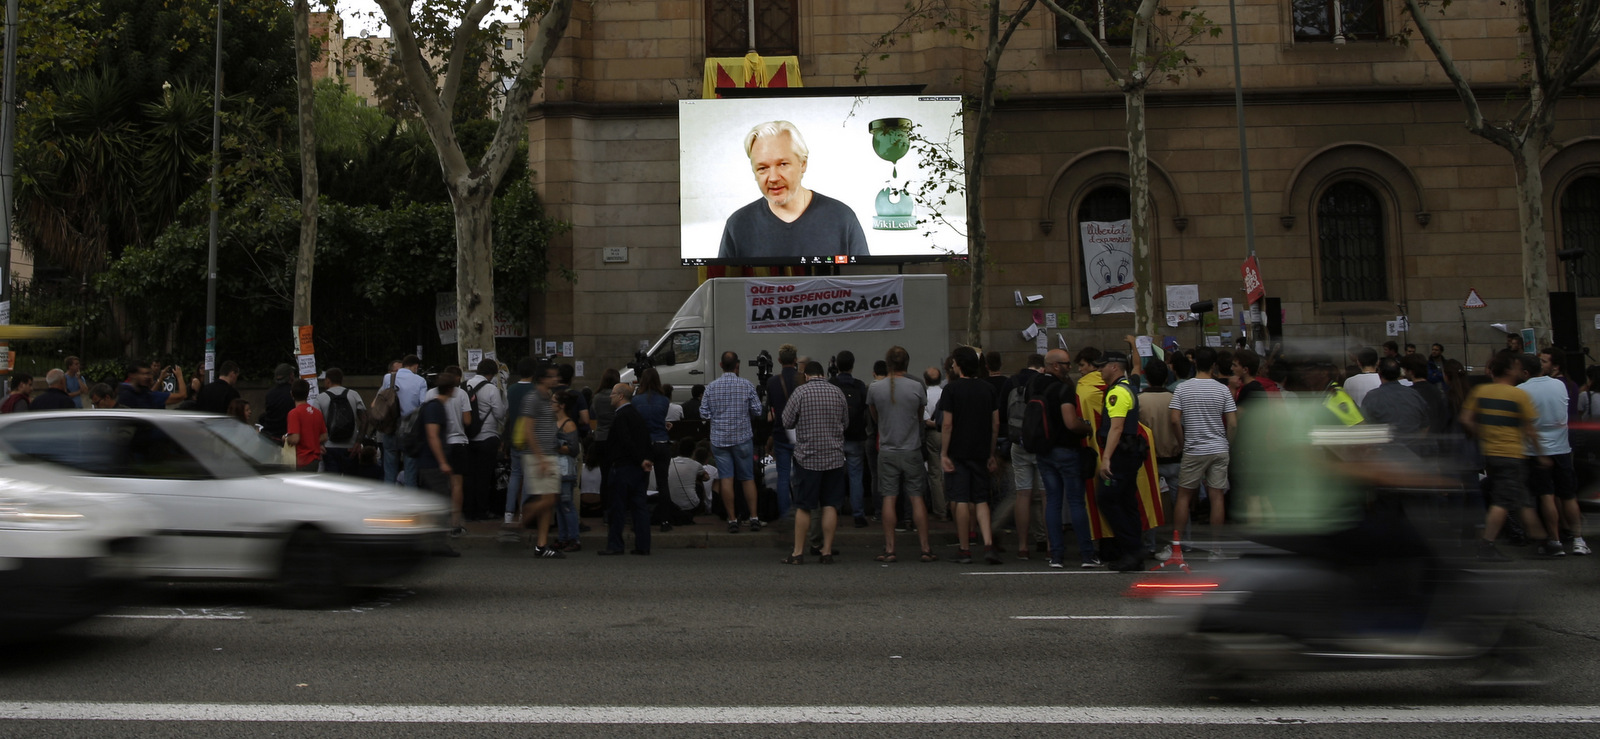 People watch a video conference of WikiLeaks founder Julian Assange outside the public university in Barcelona, Spain, Tuesday, Sept. 26, 2017. (AP/Manu Fernandez)